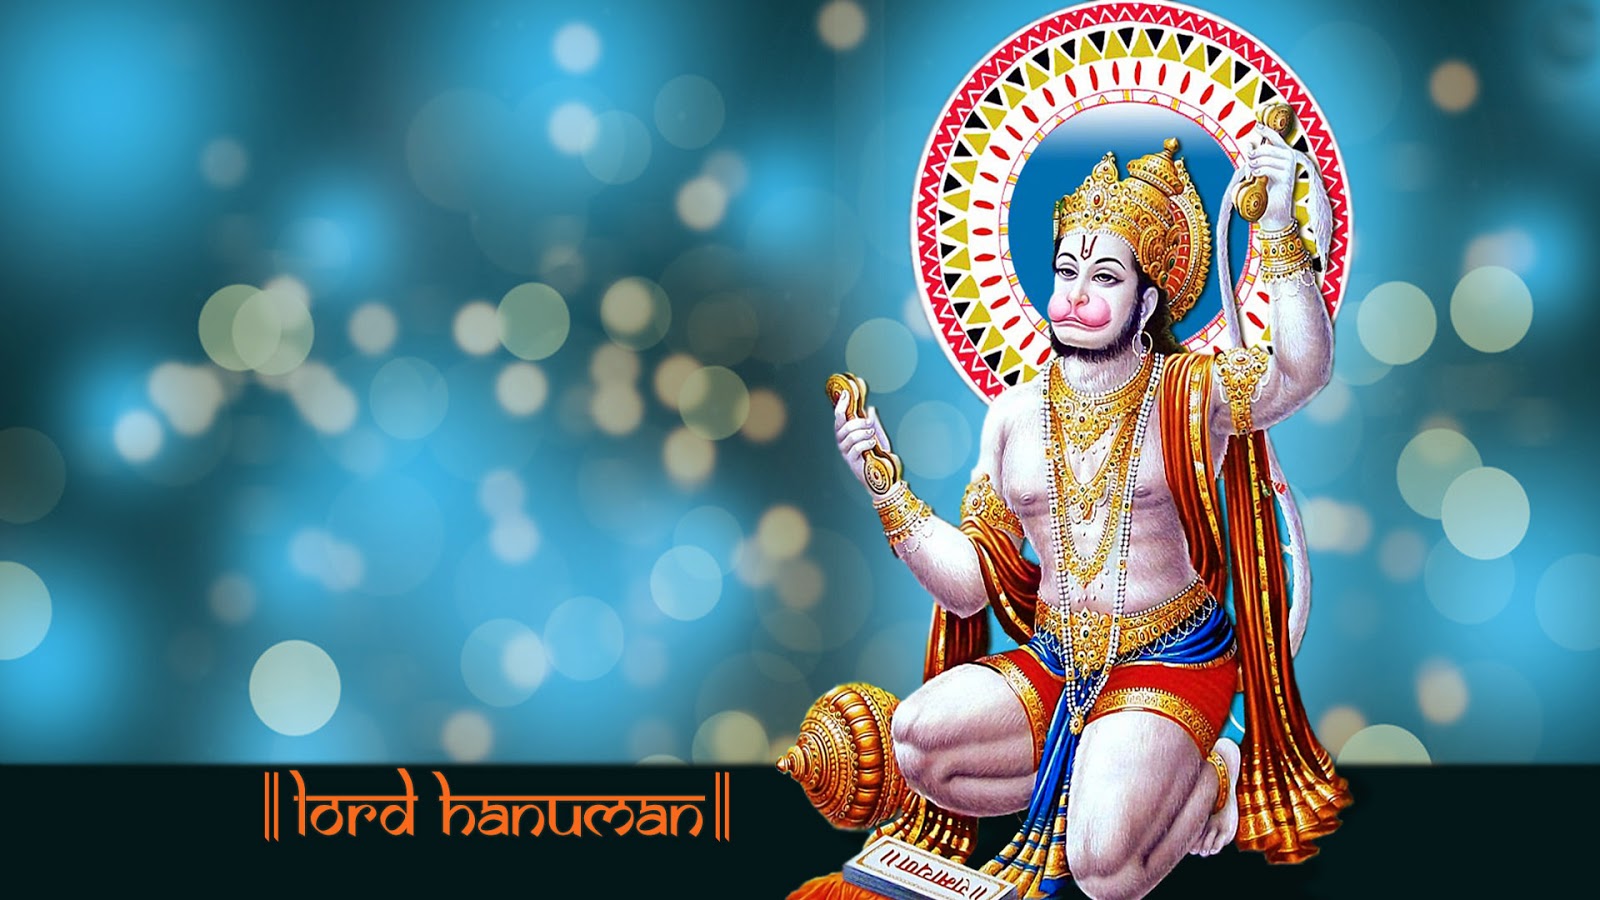  hanuman wallpapers lord hanuman lord hanuman wallpapers hd lord